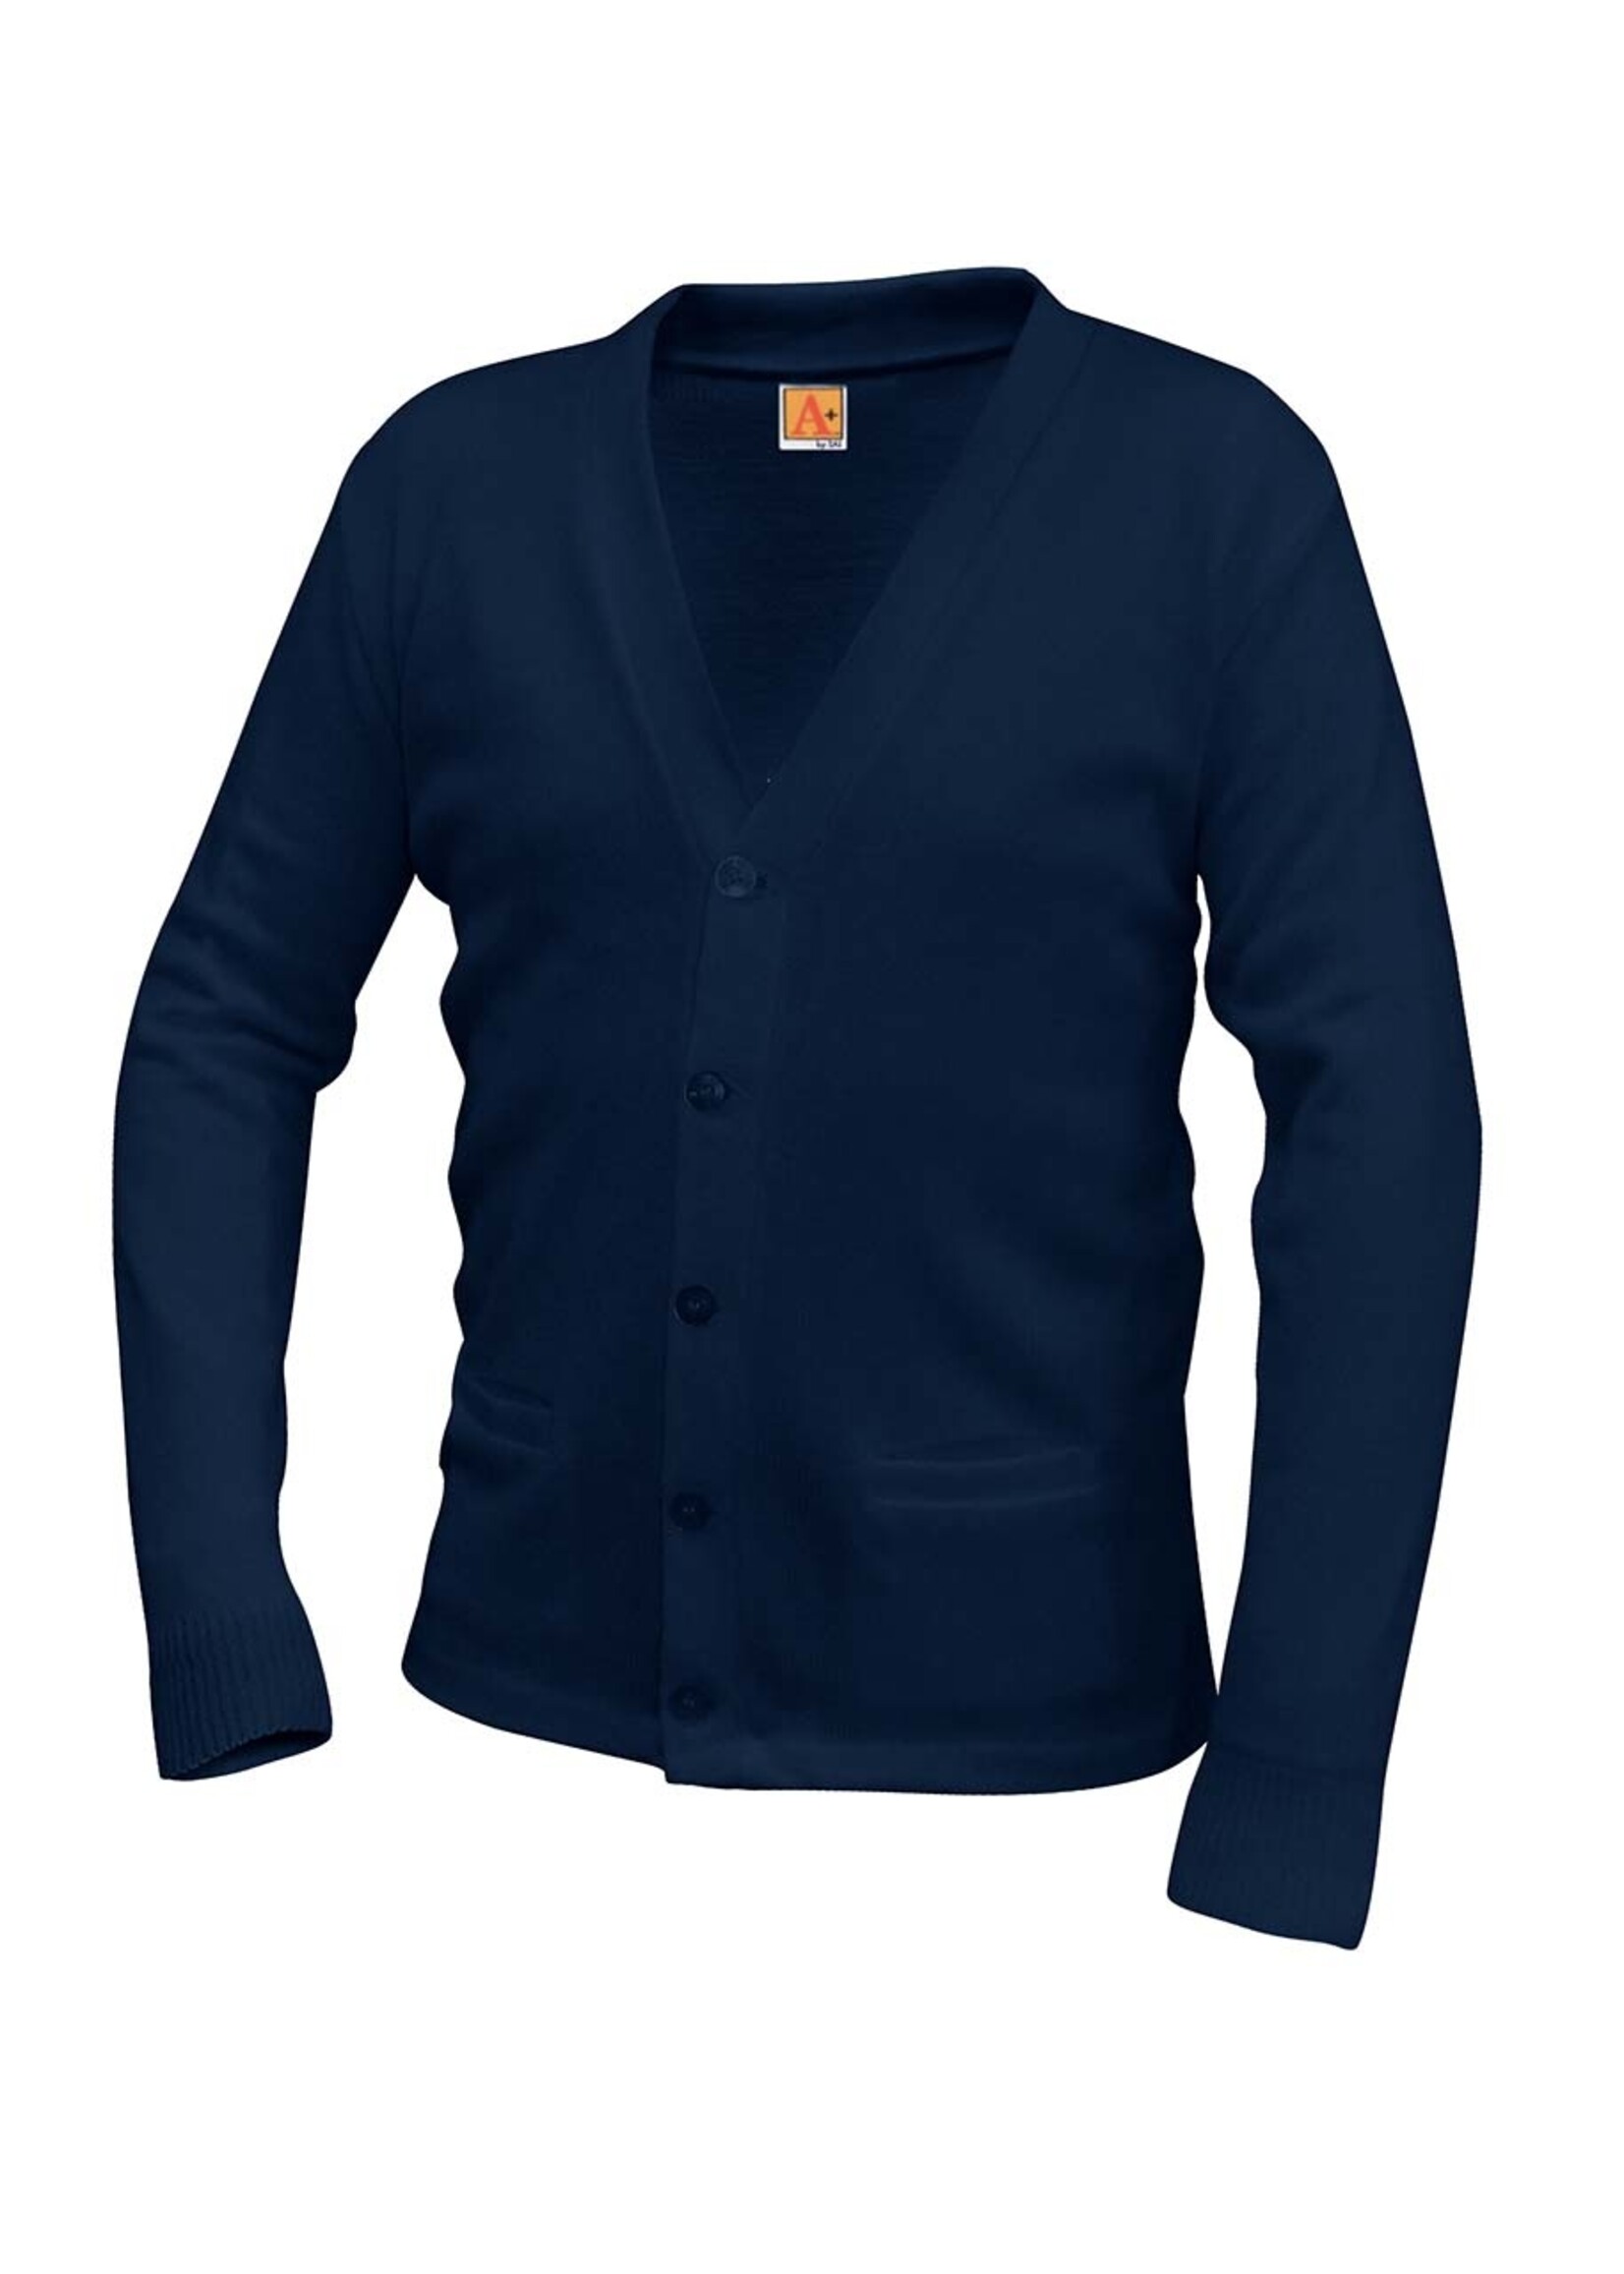 SPX Navy V-neck cardigan sweater with pockets